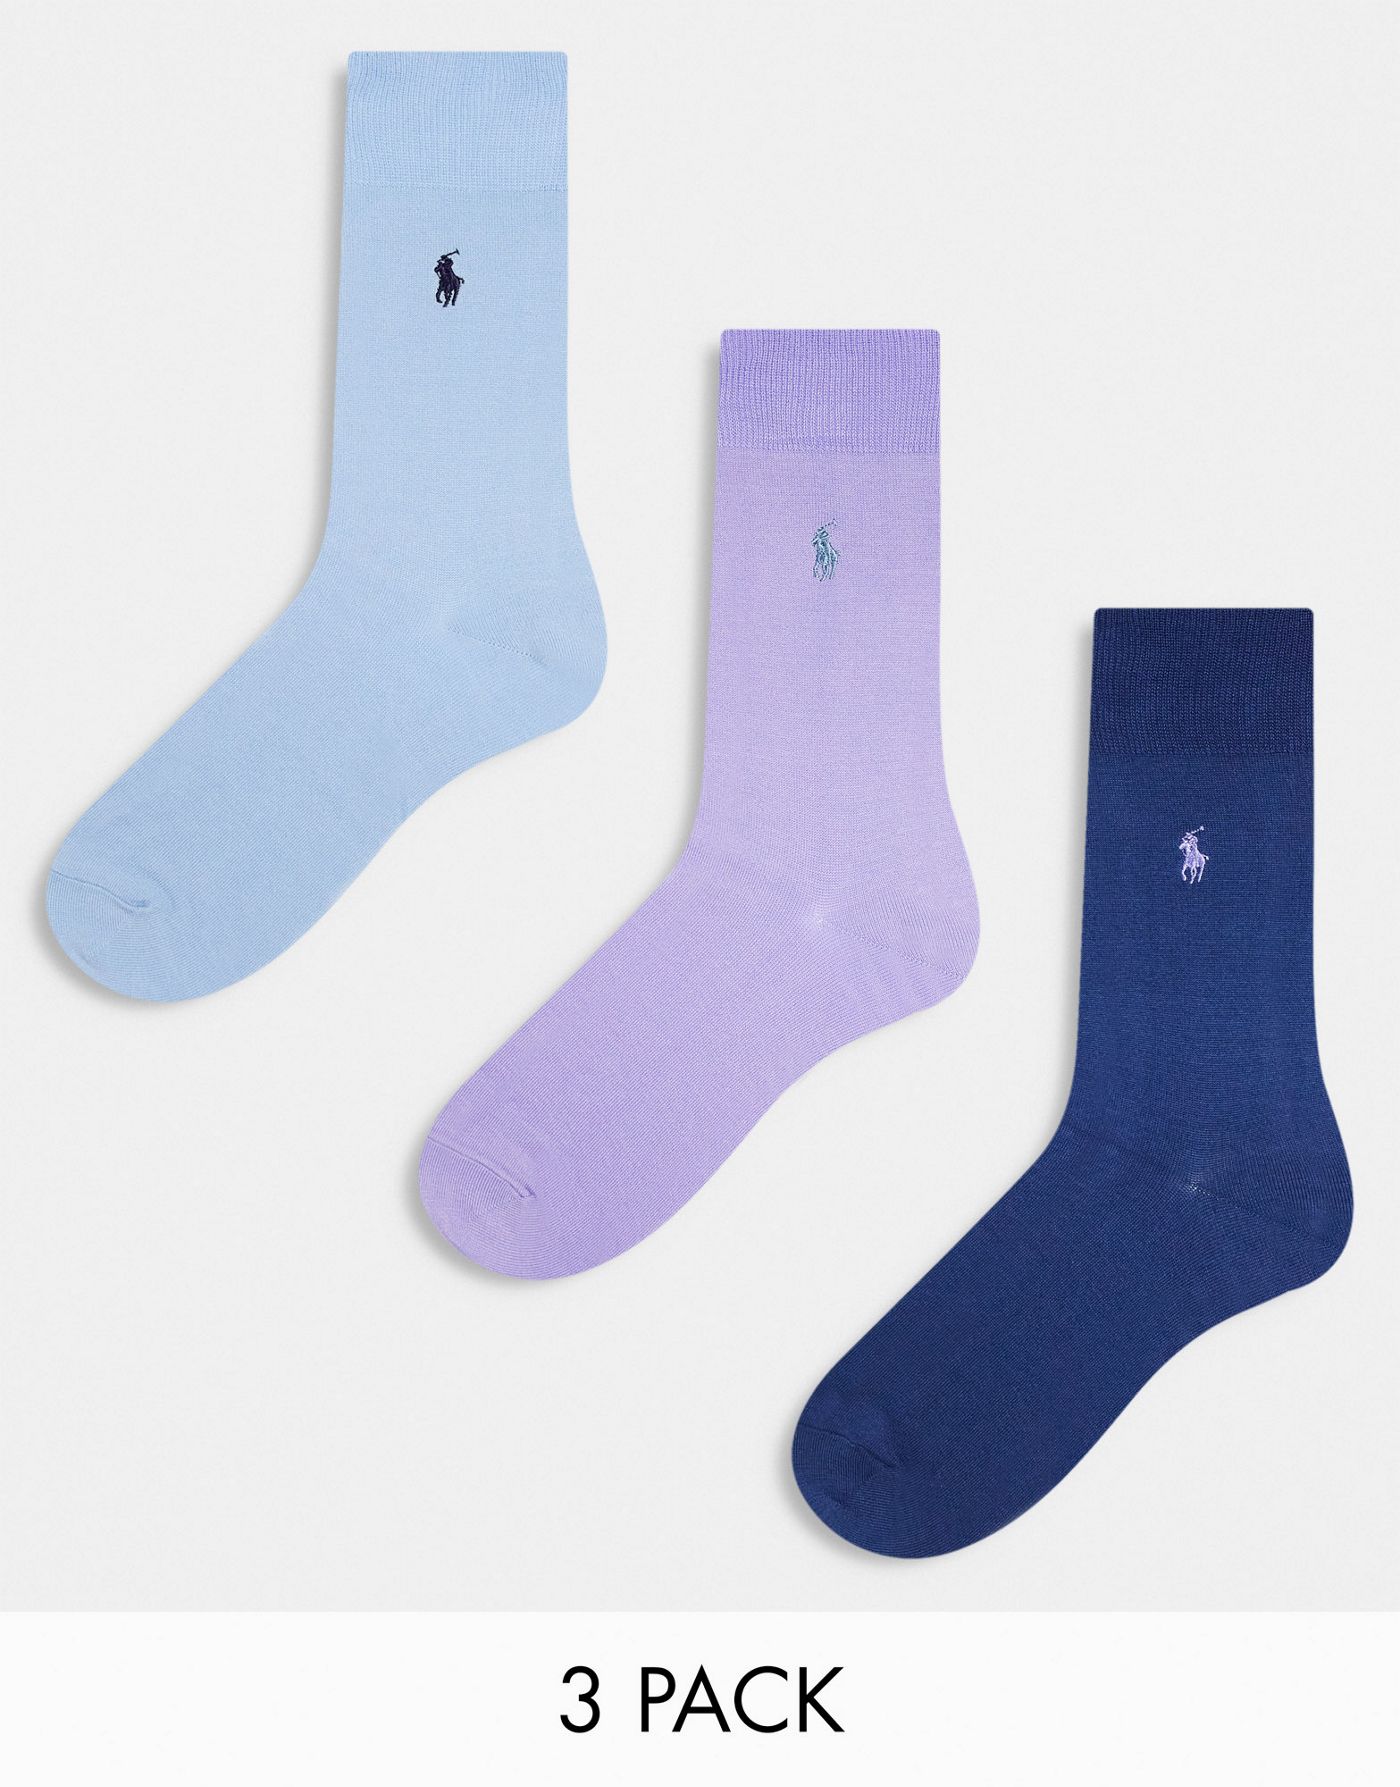 Polo Ralph Lauren 3 pack mercerized cotton socks in purple, blue, navy with pony logo